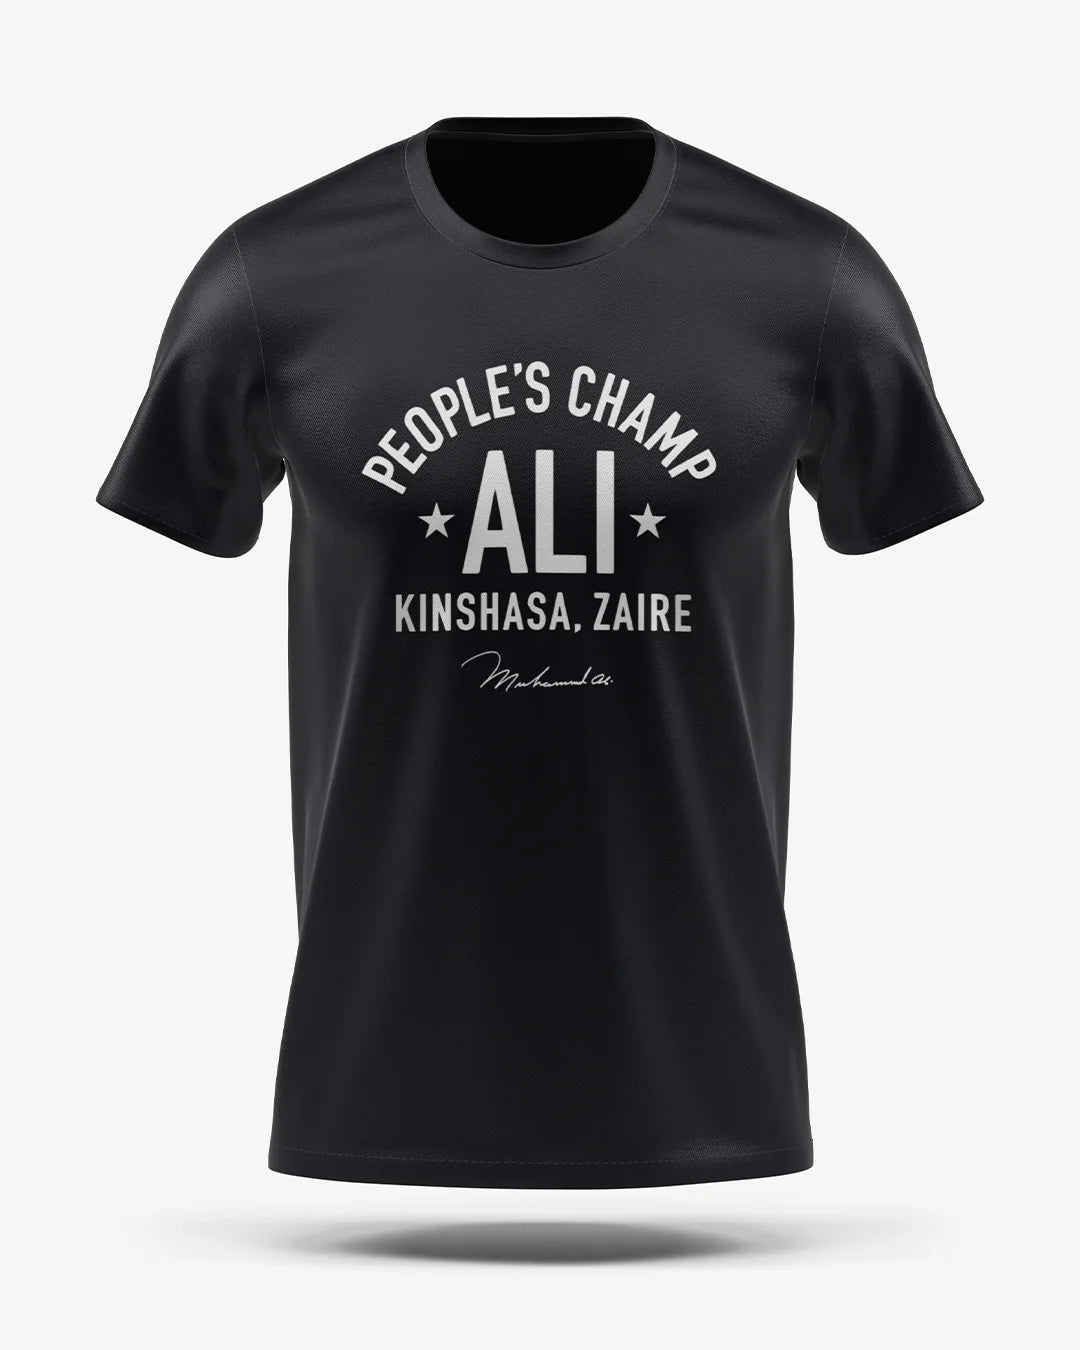 Camiseta Esporte Dry Fit - Ali People's Champ